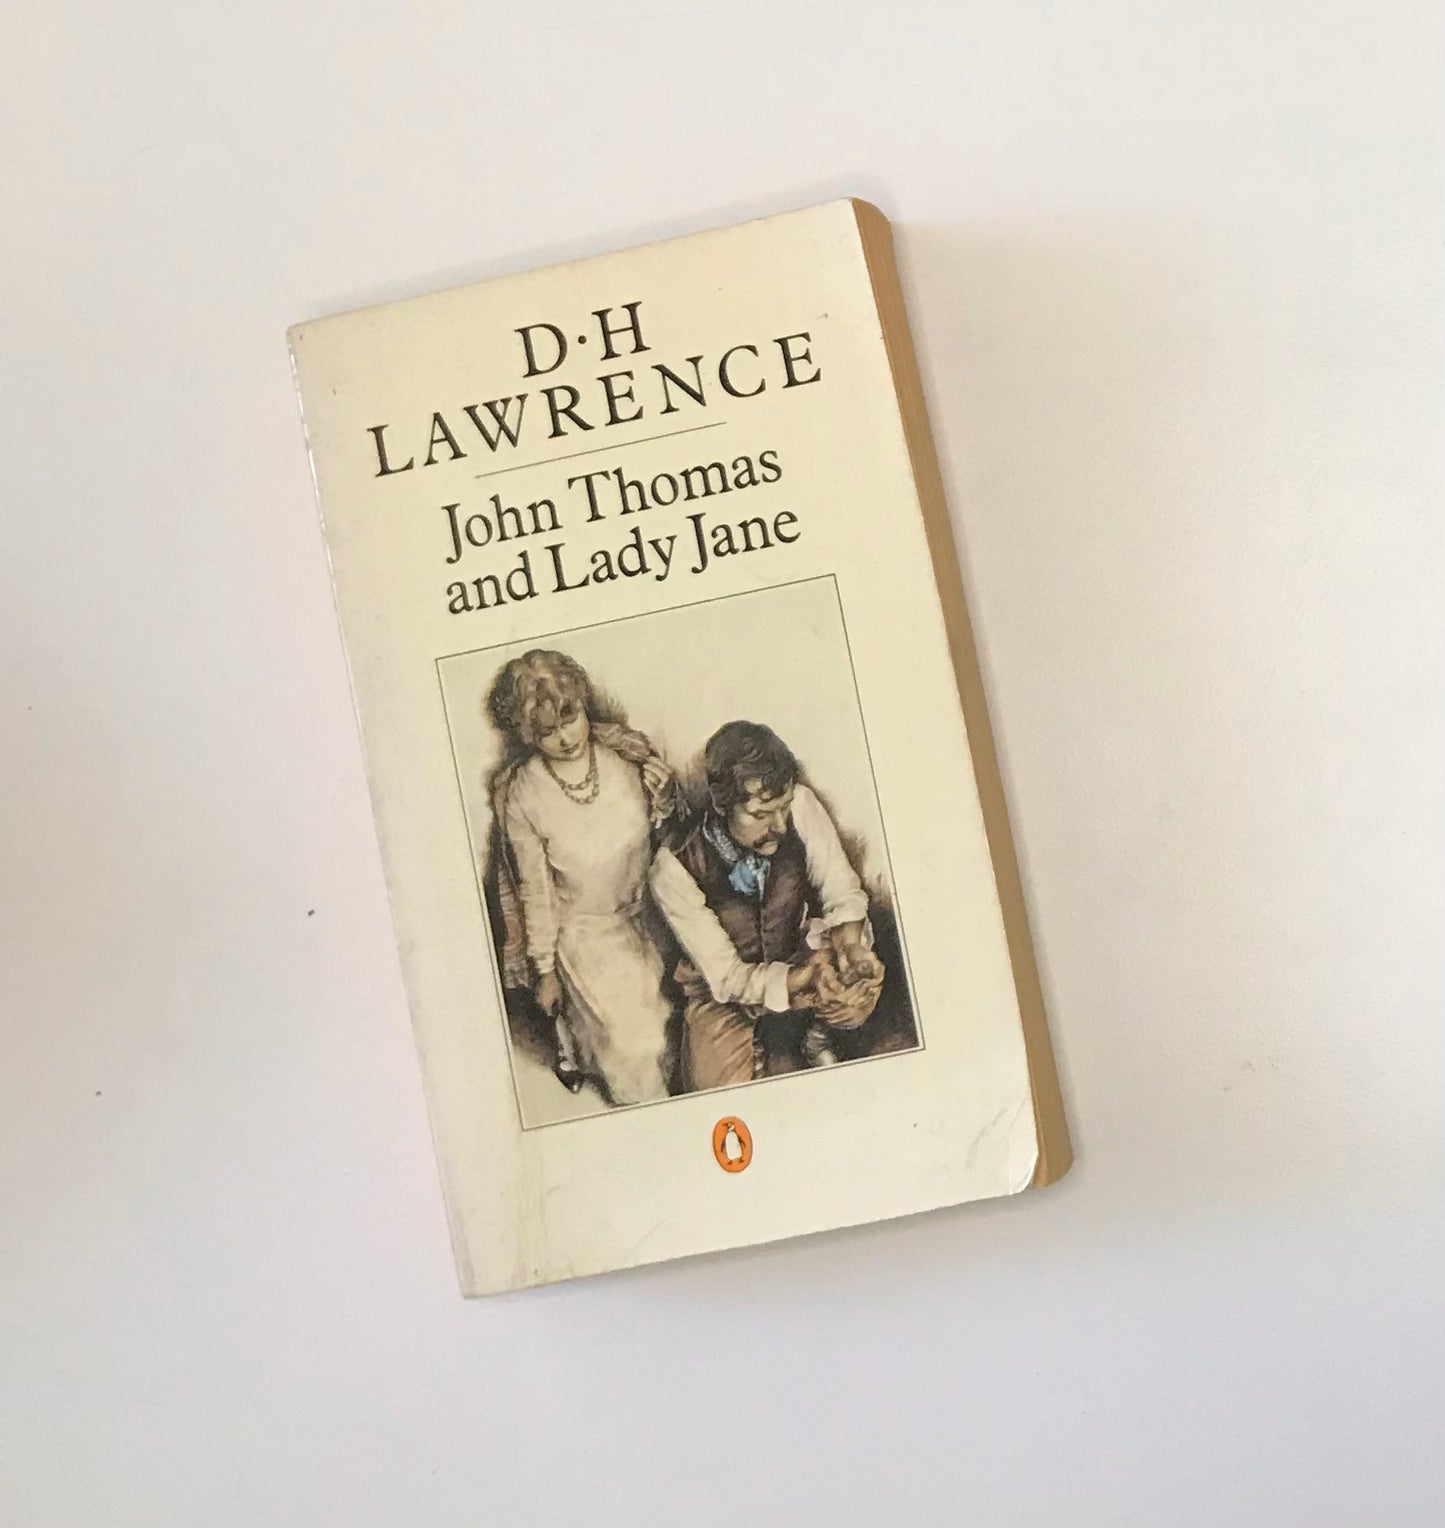 John Thomas and Lady Jane - D.H. Lawrence